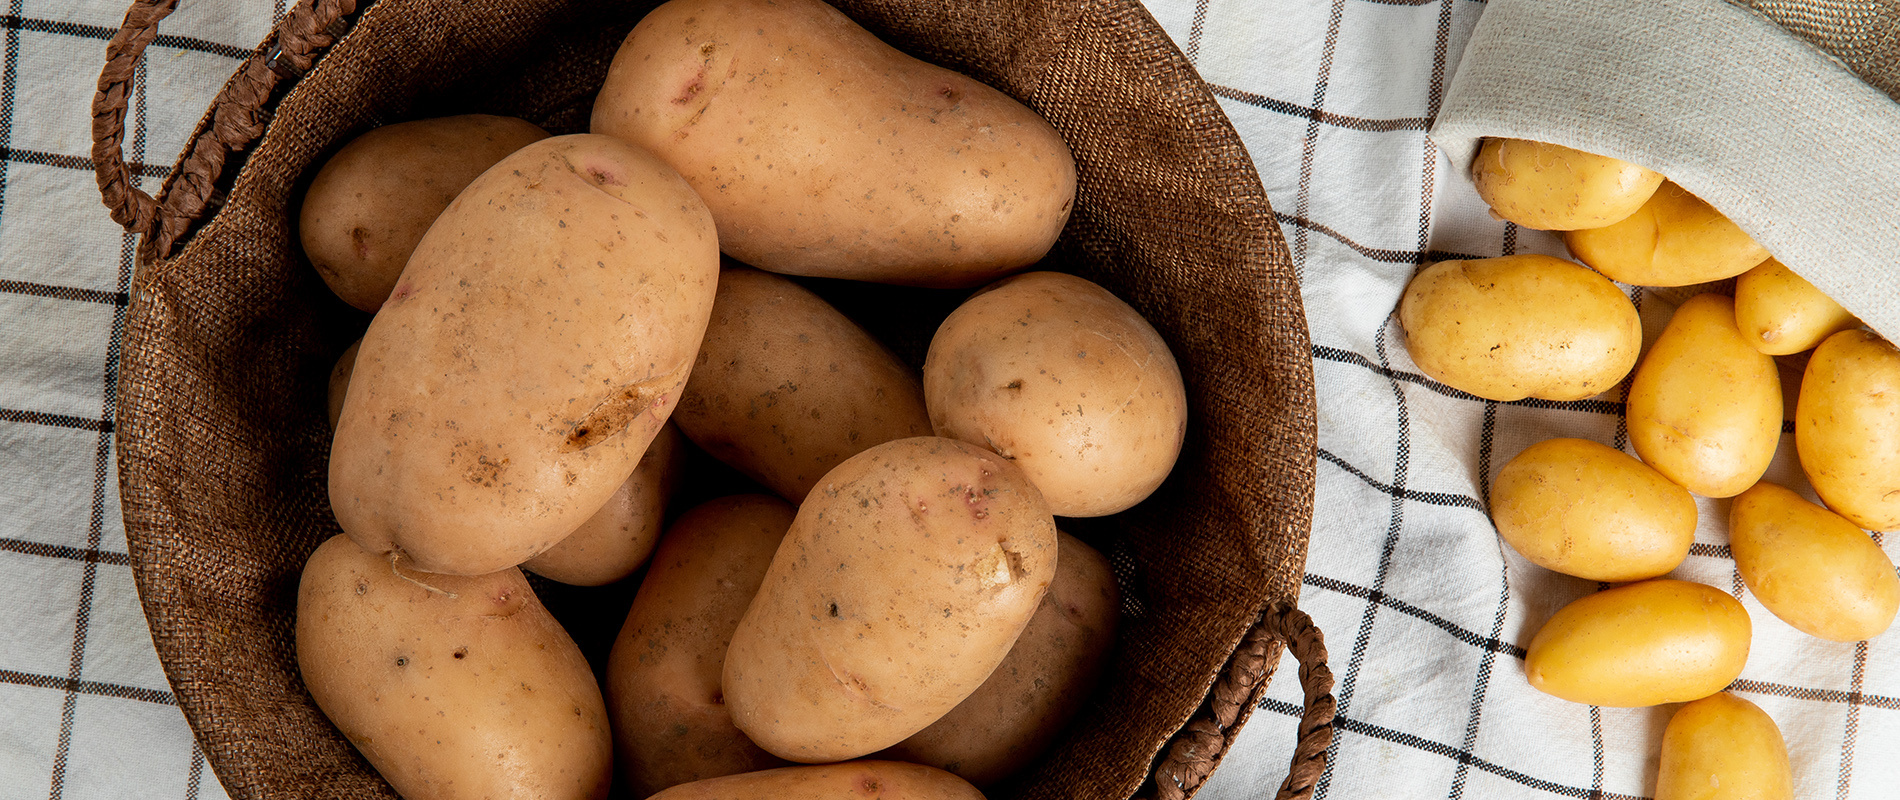 We like potatoes. Мешок картошки. Картофель в корзинке. Картофель в песке. Картофель в мешке вид сверху.